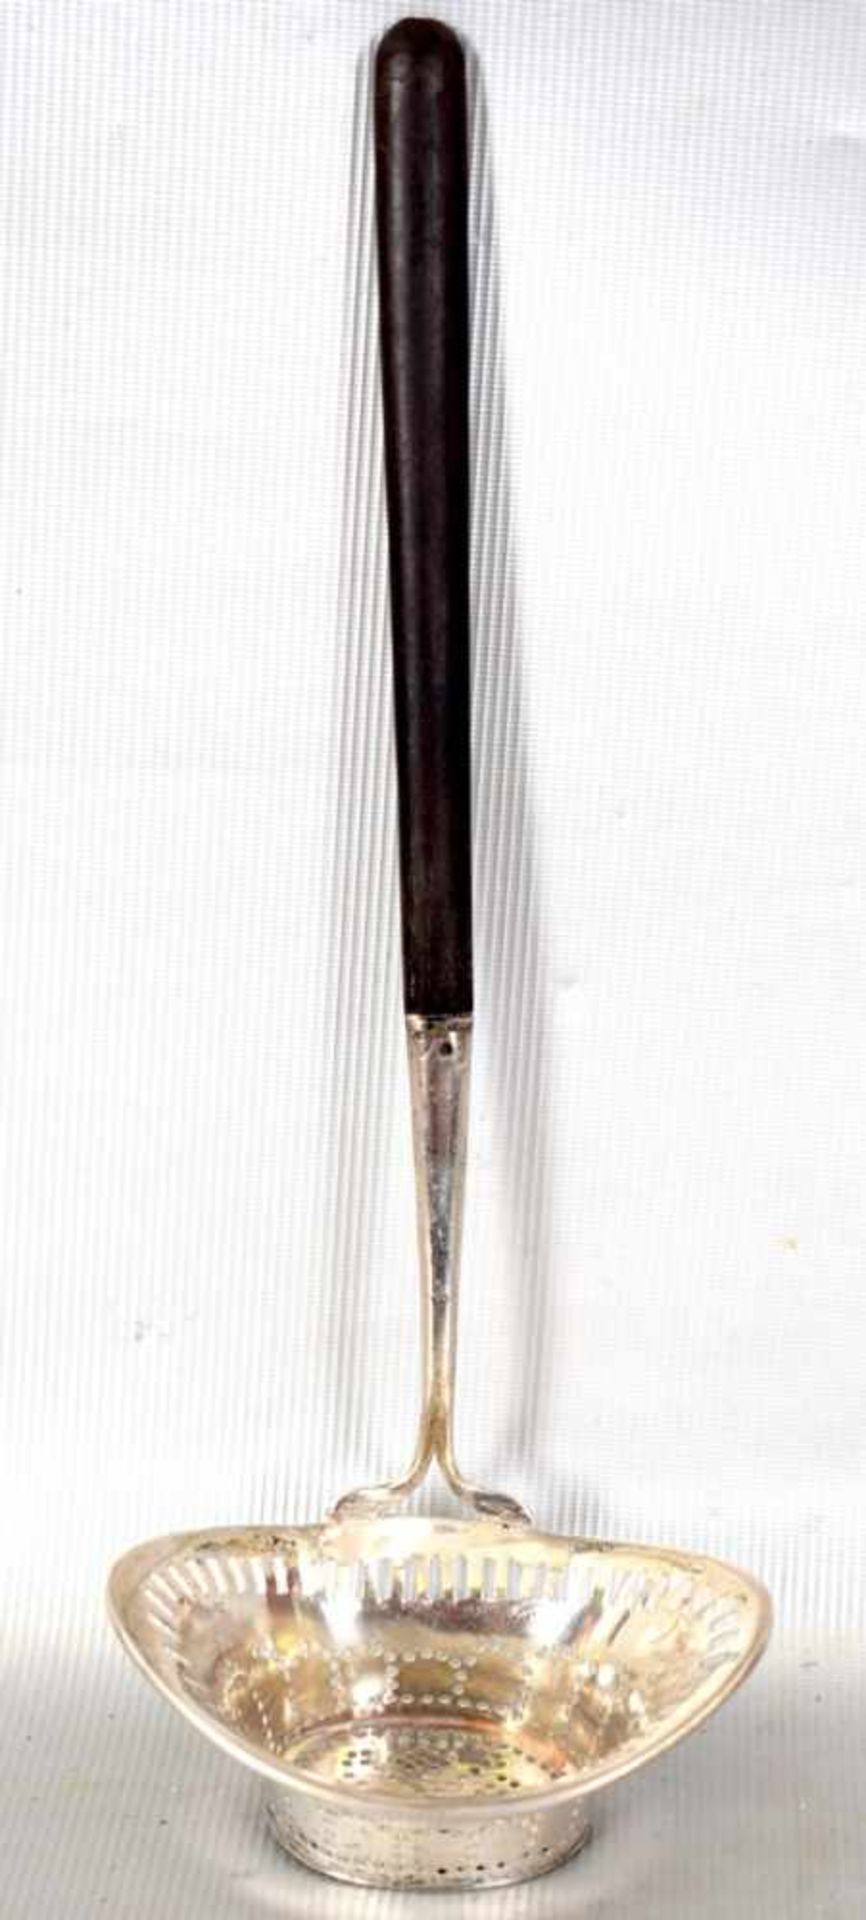 Biedermeier-Teesieb oval, durchbrochen verziert, schwarzer Holzgriff, 19. Jh.